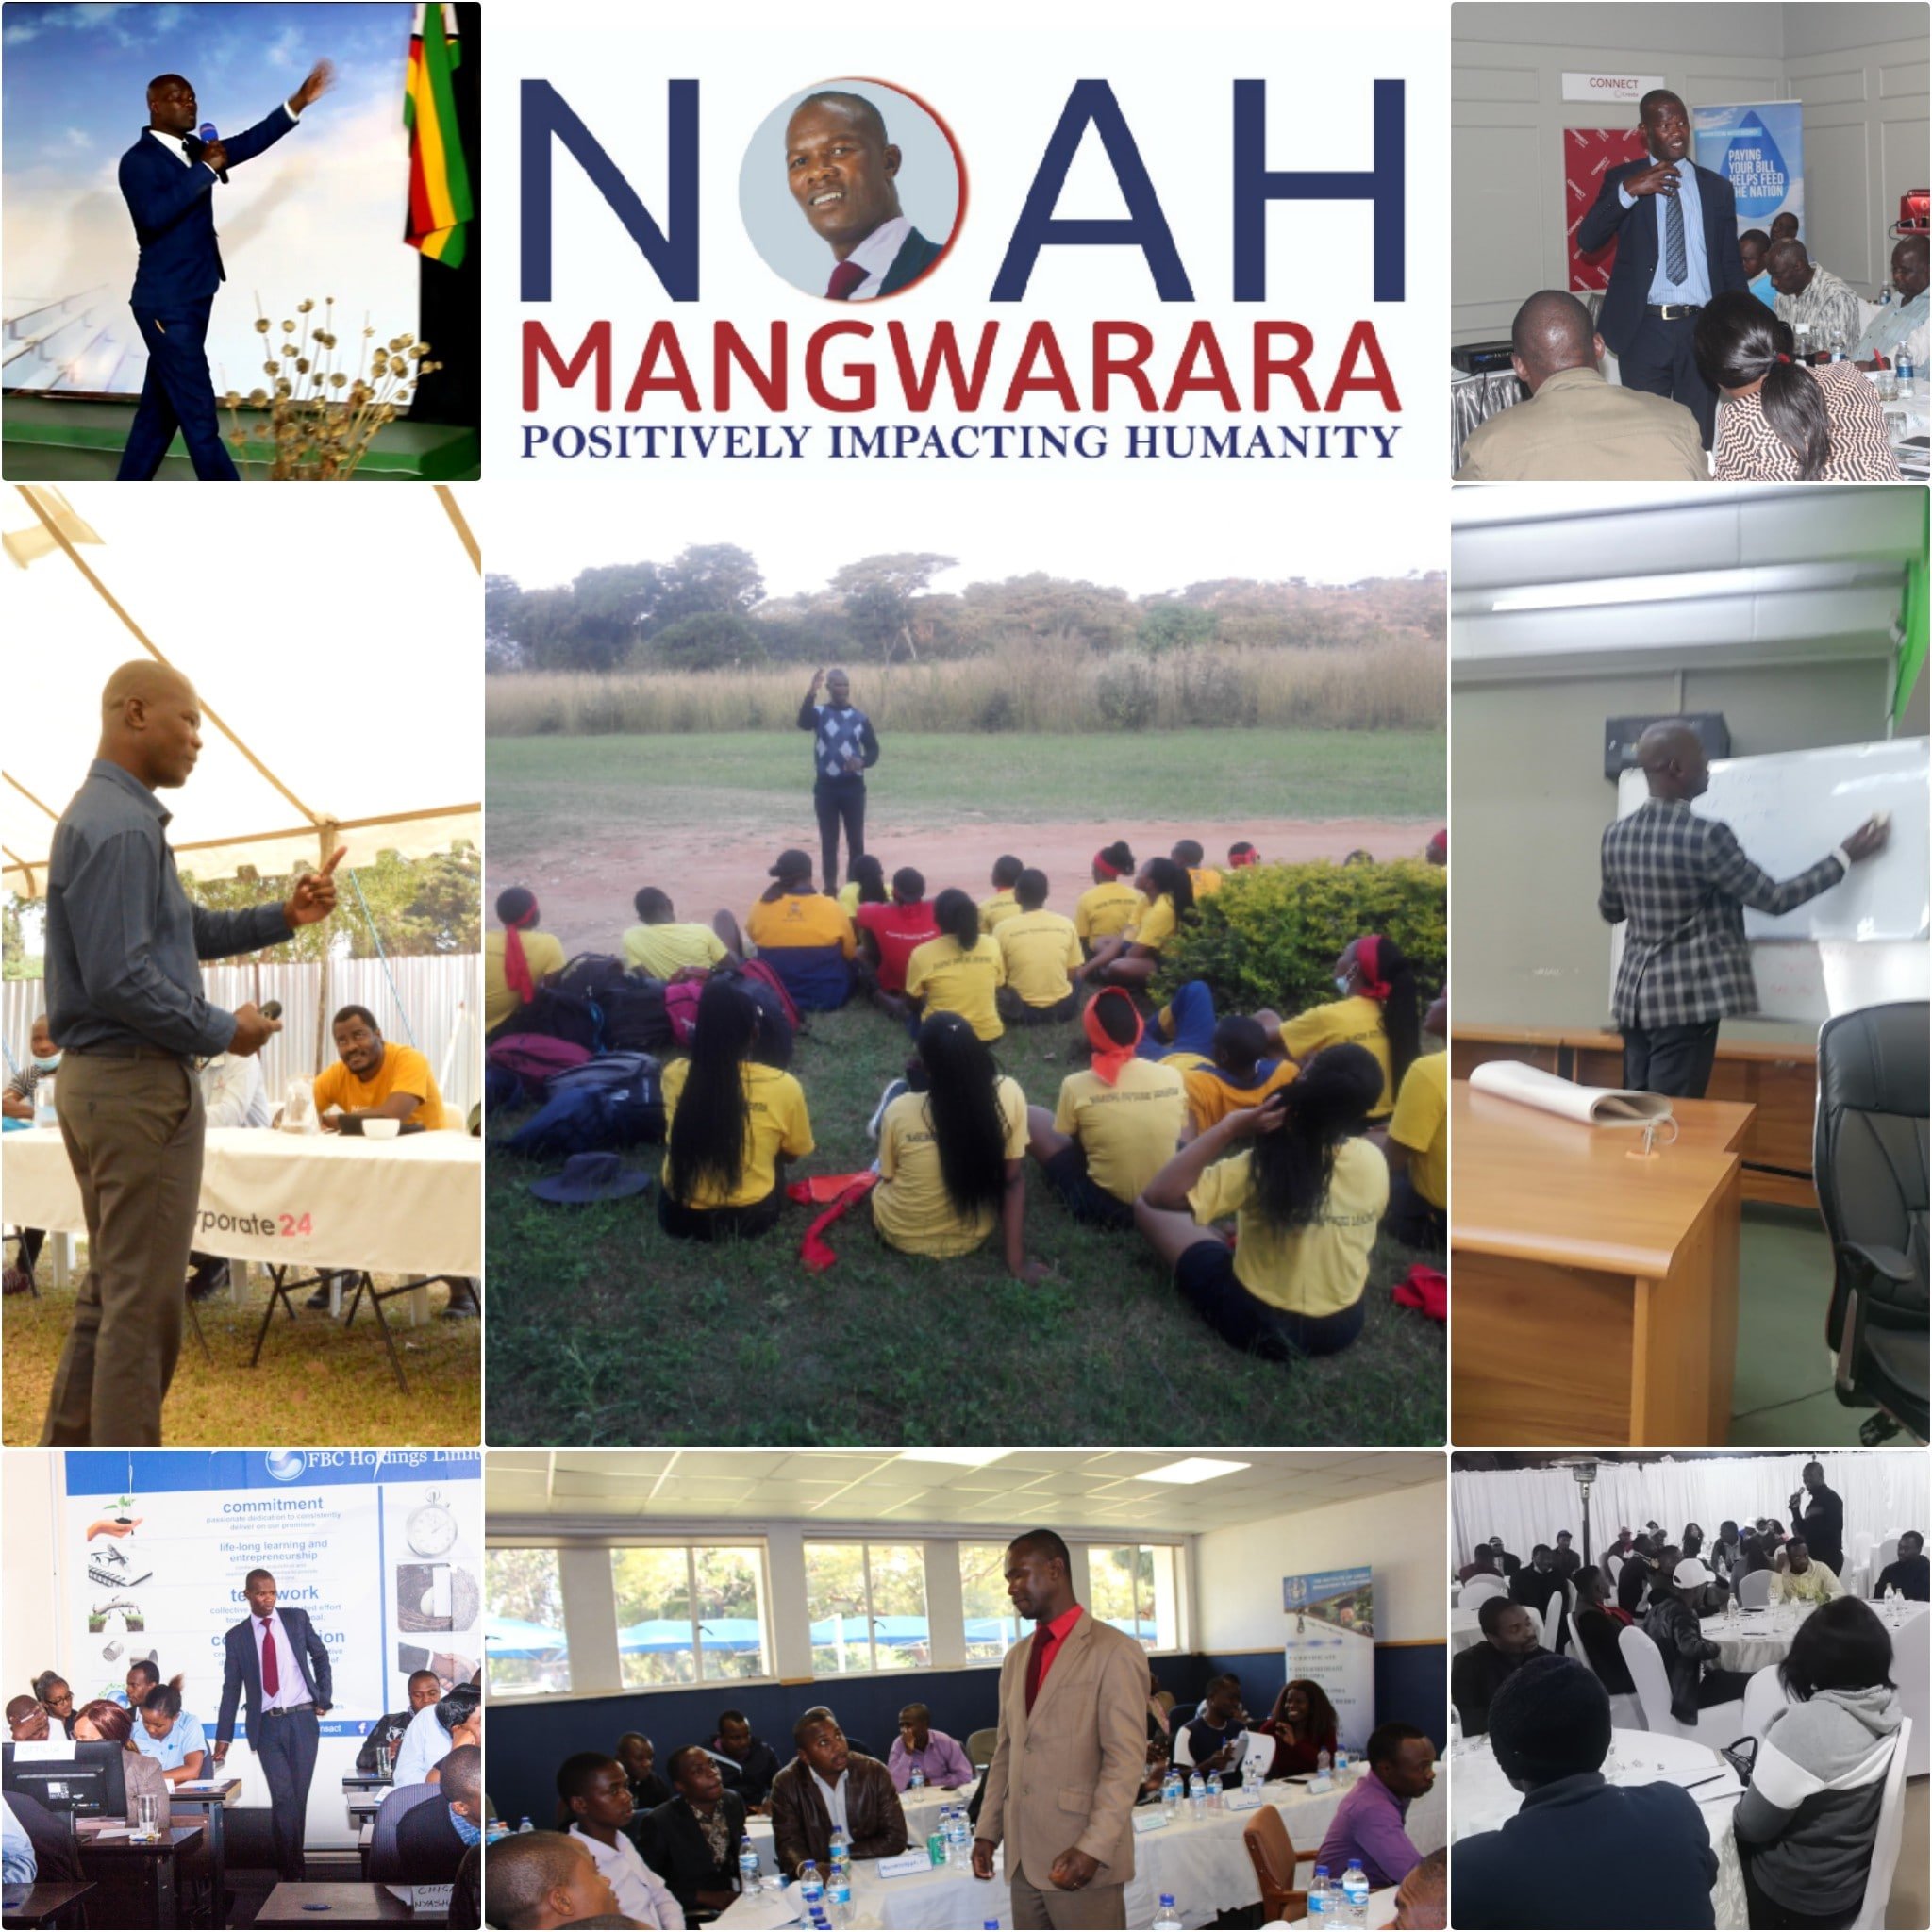 Noah Mangwarara Leadership Coach Motivational Speaker Harare Zimbabwe